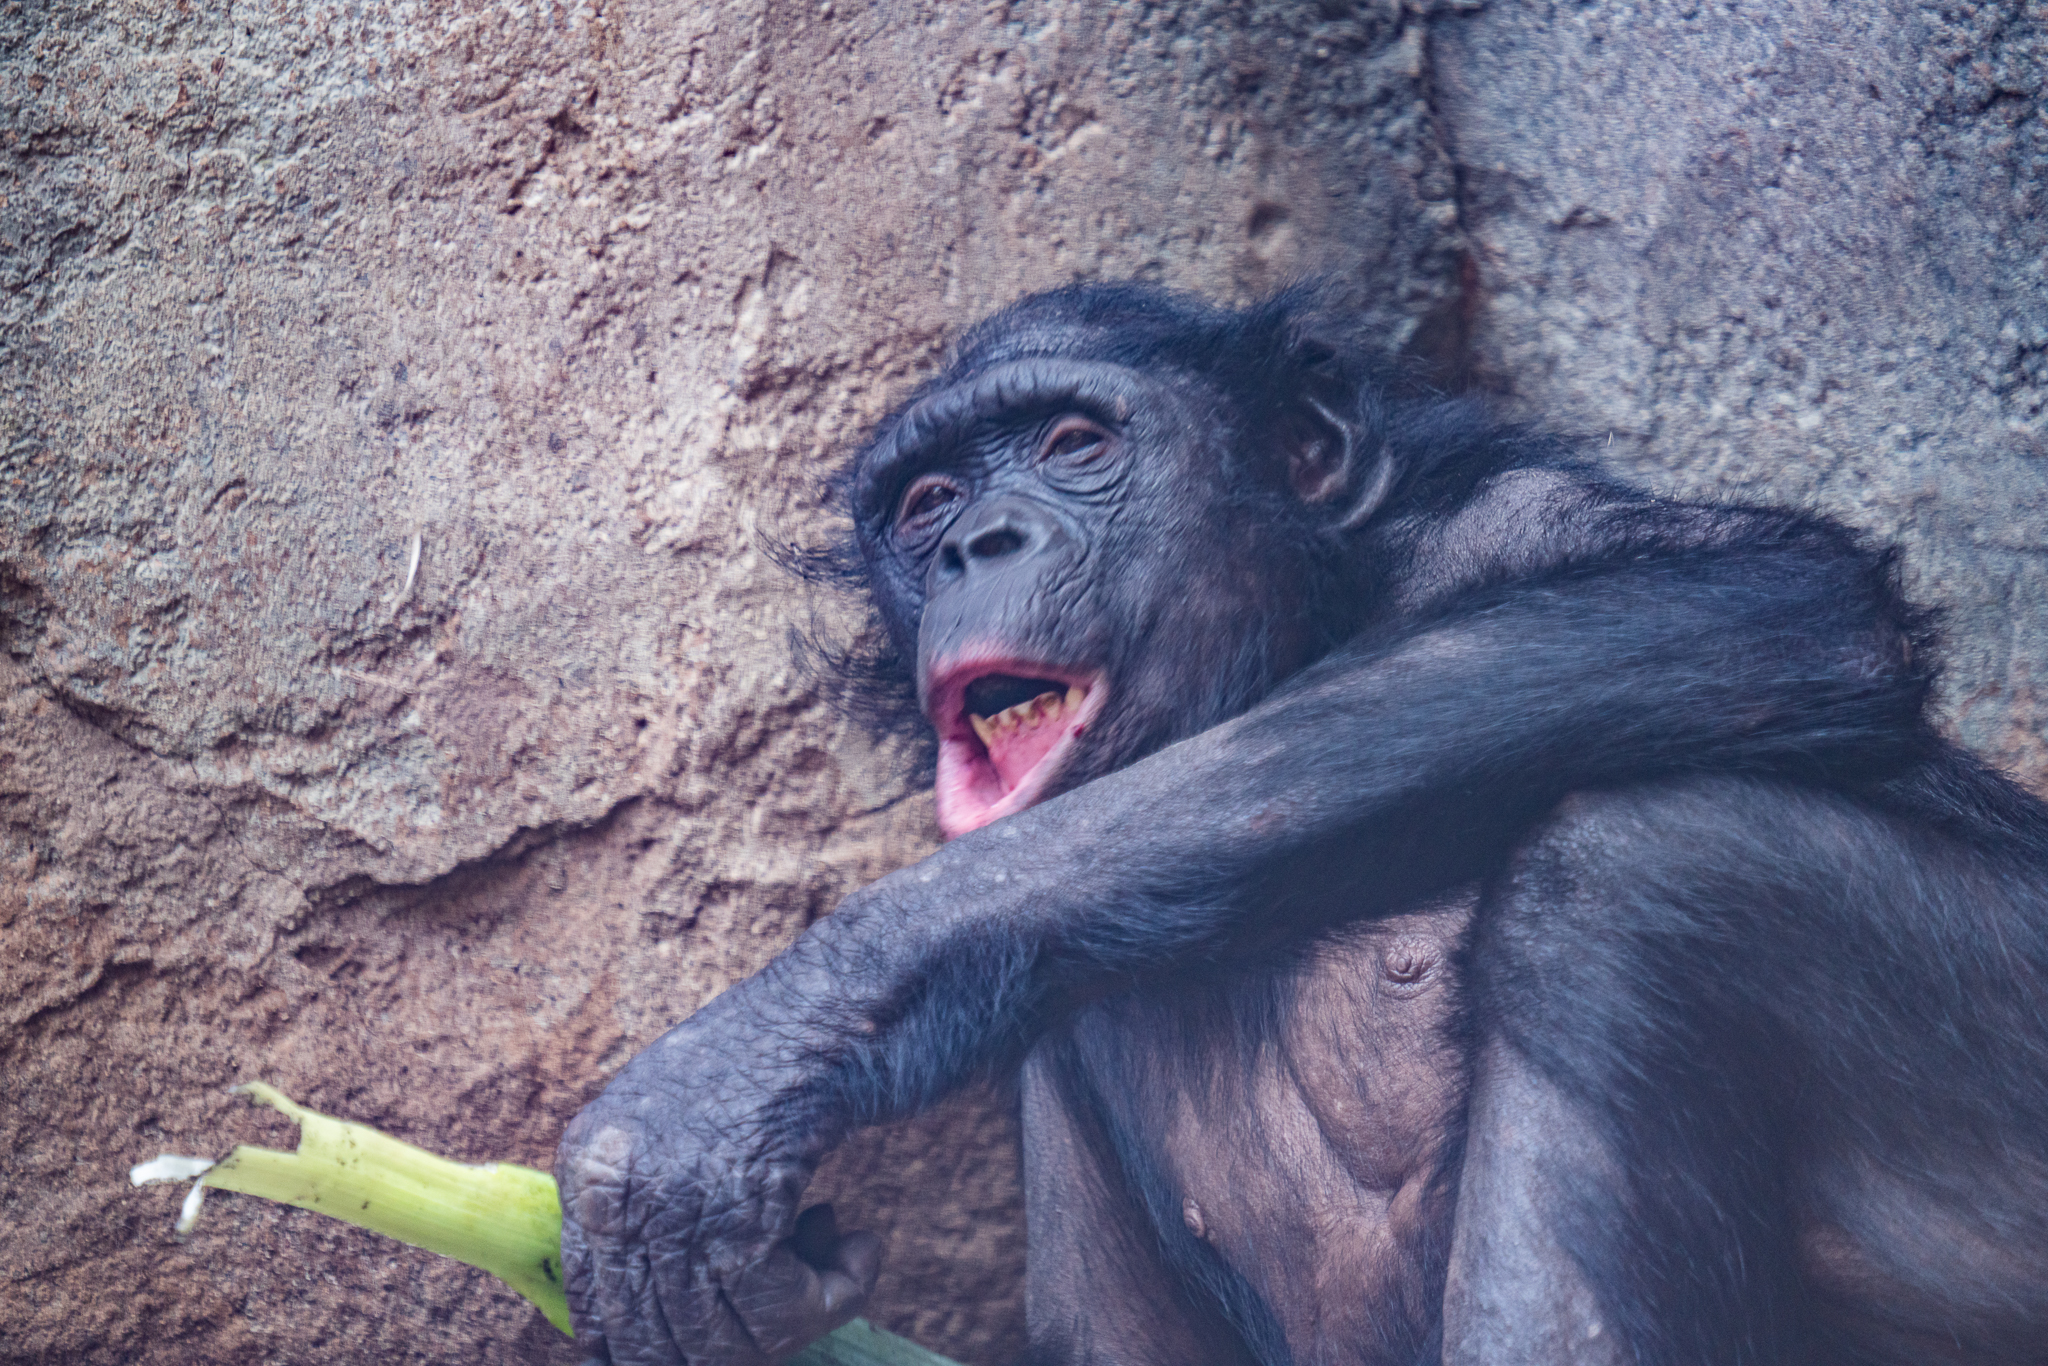 Bonobo

#sony #sonya7riii #ilce7rm3 #sonyphotography #sigma150600mmsport #photooftheday #nature #naturephotography #zoofotografie #animals #zooanimalsofinstagram #tierpark #zoo #animalphotography #zooanimal #zoopark #zoophoto #fotografie #frankfurt #zoofrankfurt #frankfurterzoo #tierfotografie #naturliebe #tierliebe #einhesseunterwegs 
#bonobo